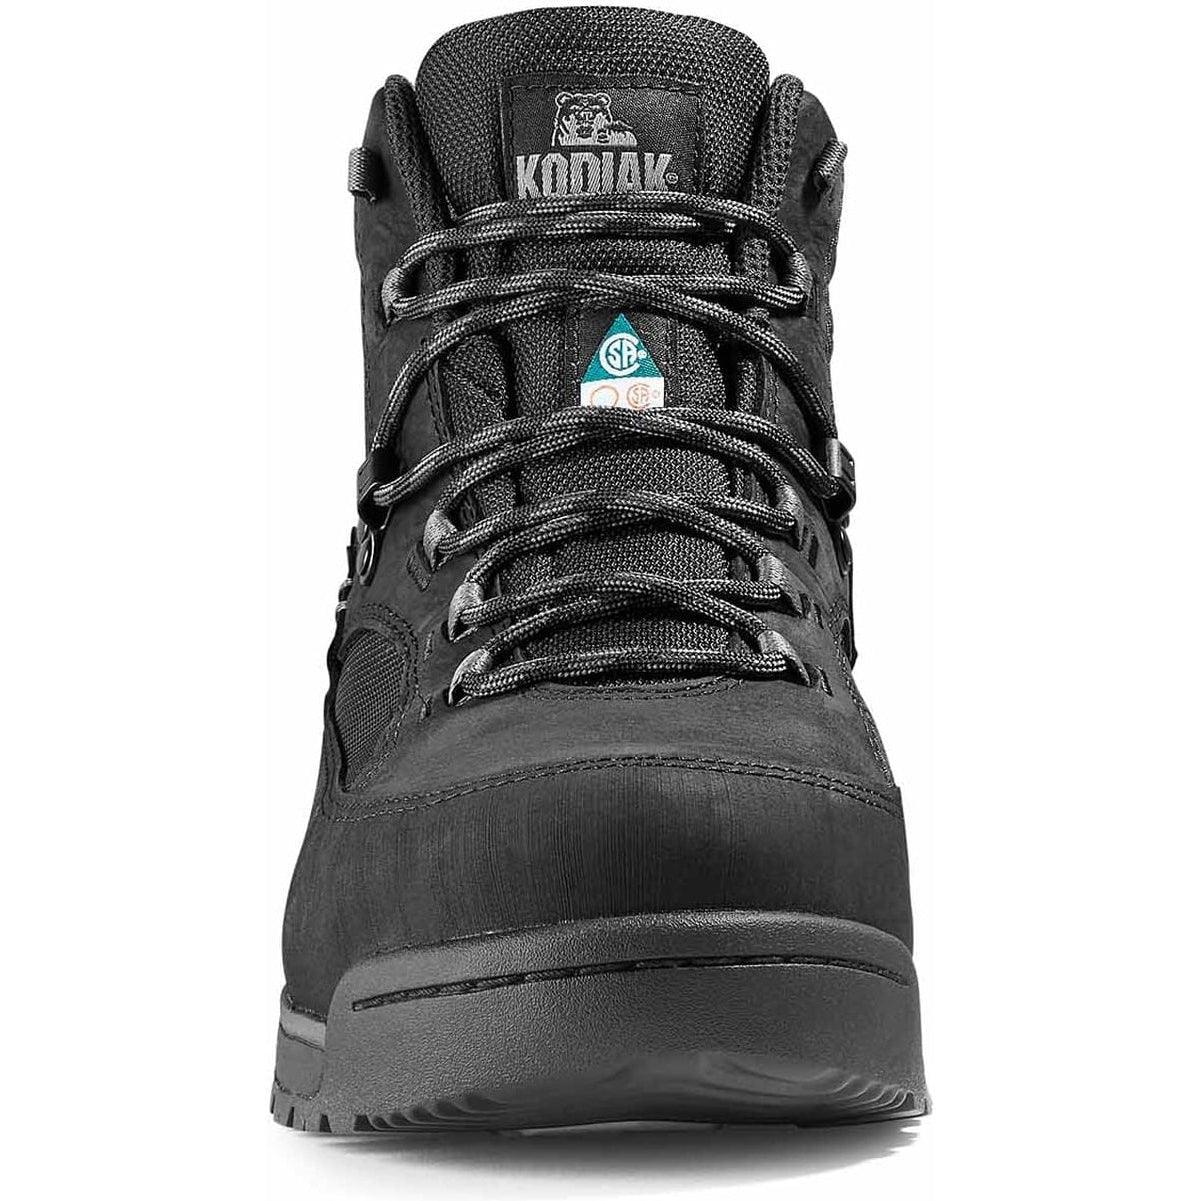 Kodiak Men's Greb Classic Steel Toe WP Hiker Safety Work Boot -Black- 834XBK  - Overlook Boots